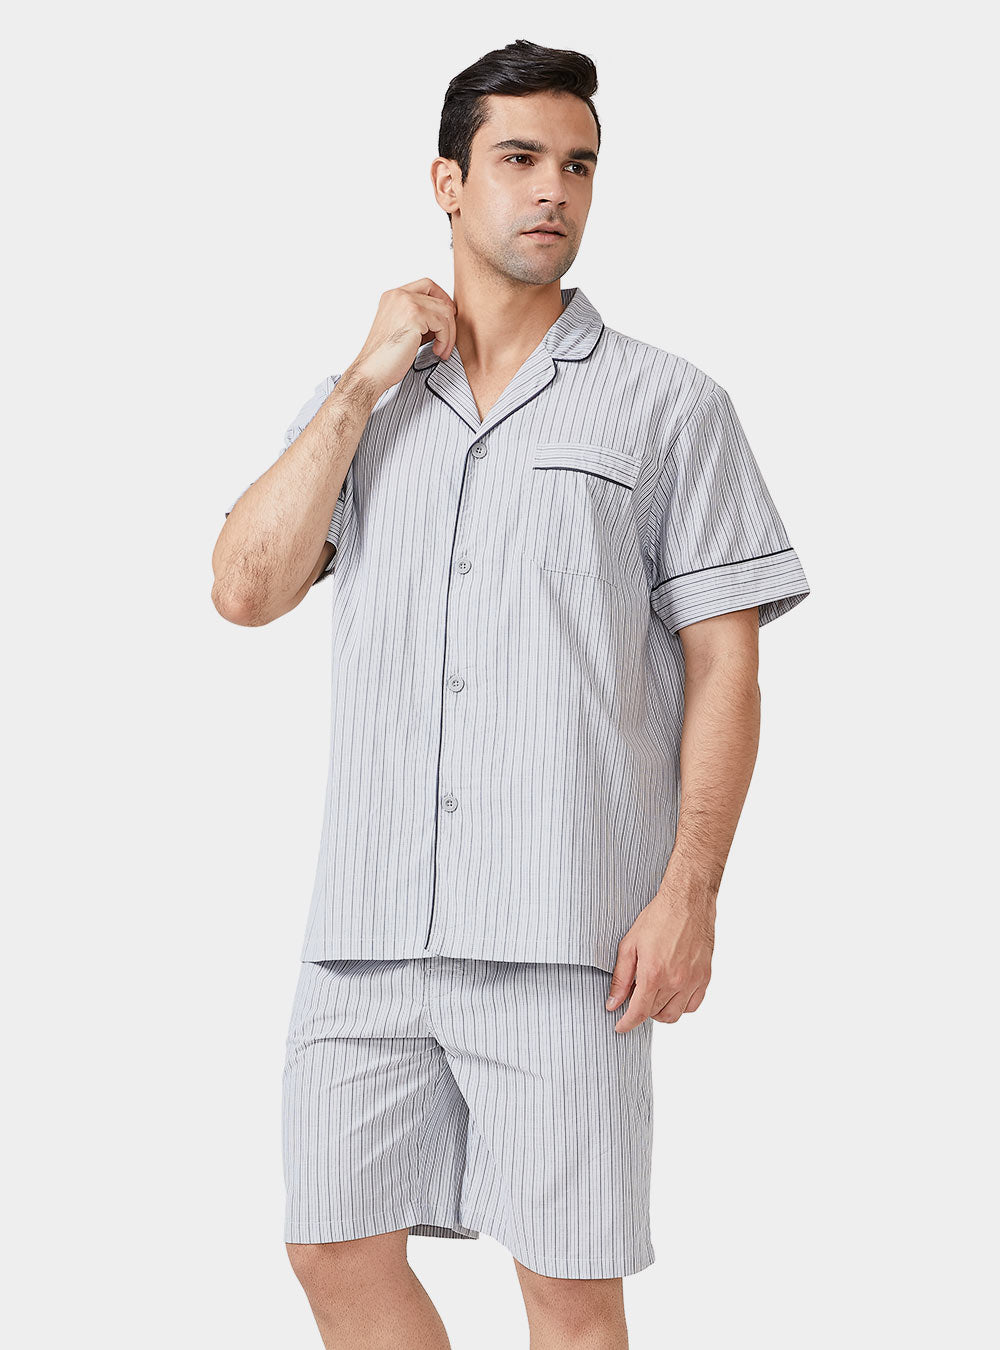 Stripe Classic Button-Front Pajamas - Navy in Men's Cotton Pajamas, Pajamas  for Men